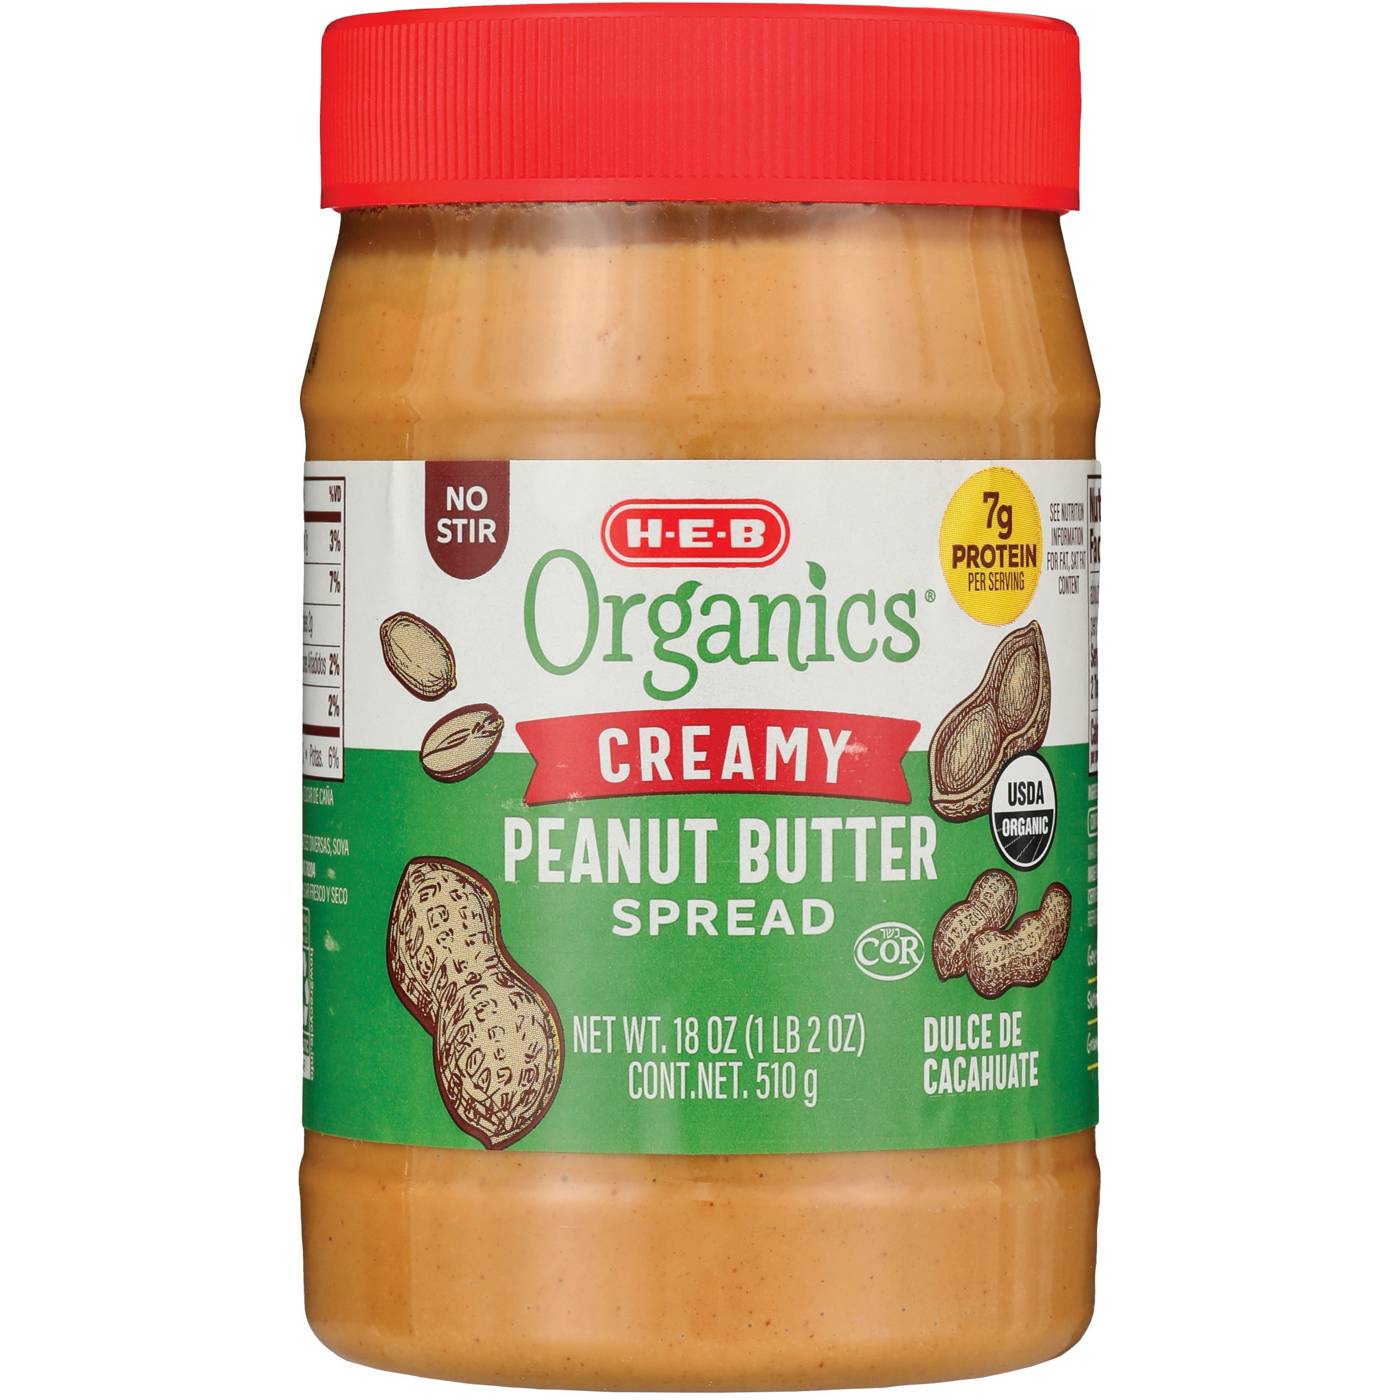 H-E-B Organics Peanut Butter Spread - Creamy; image 1 of 2